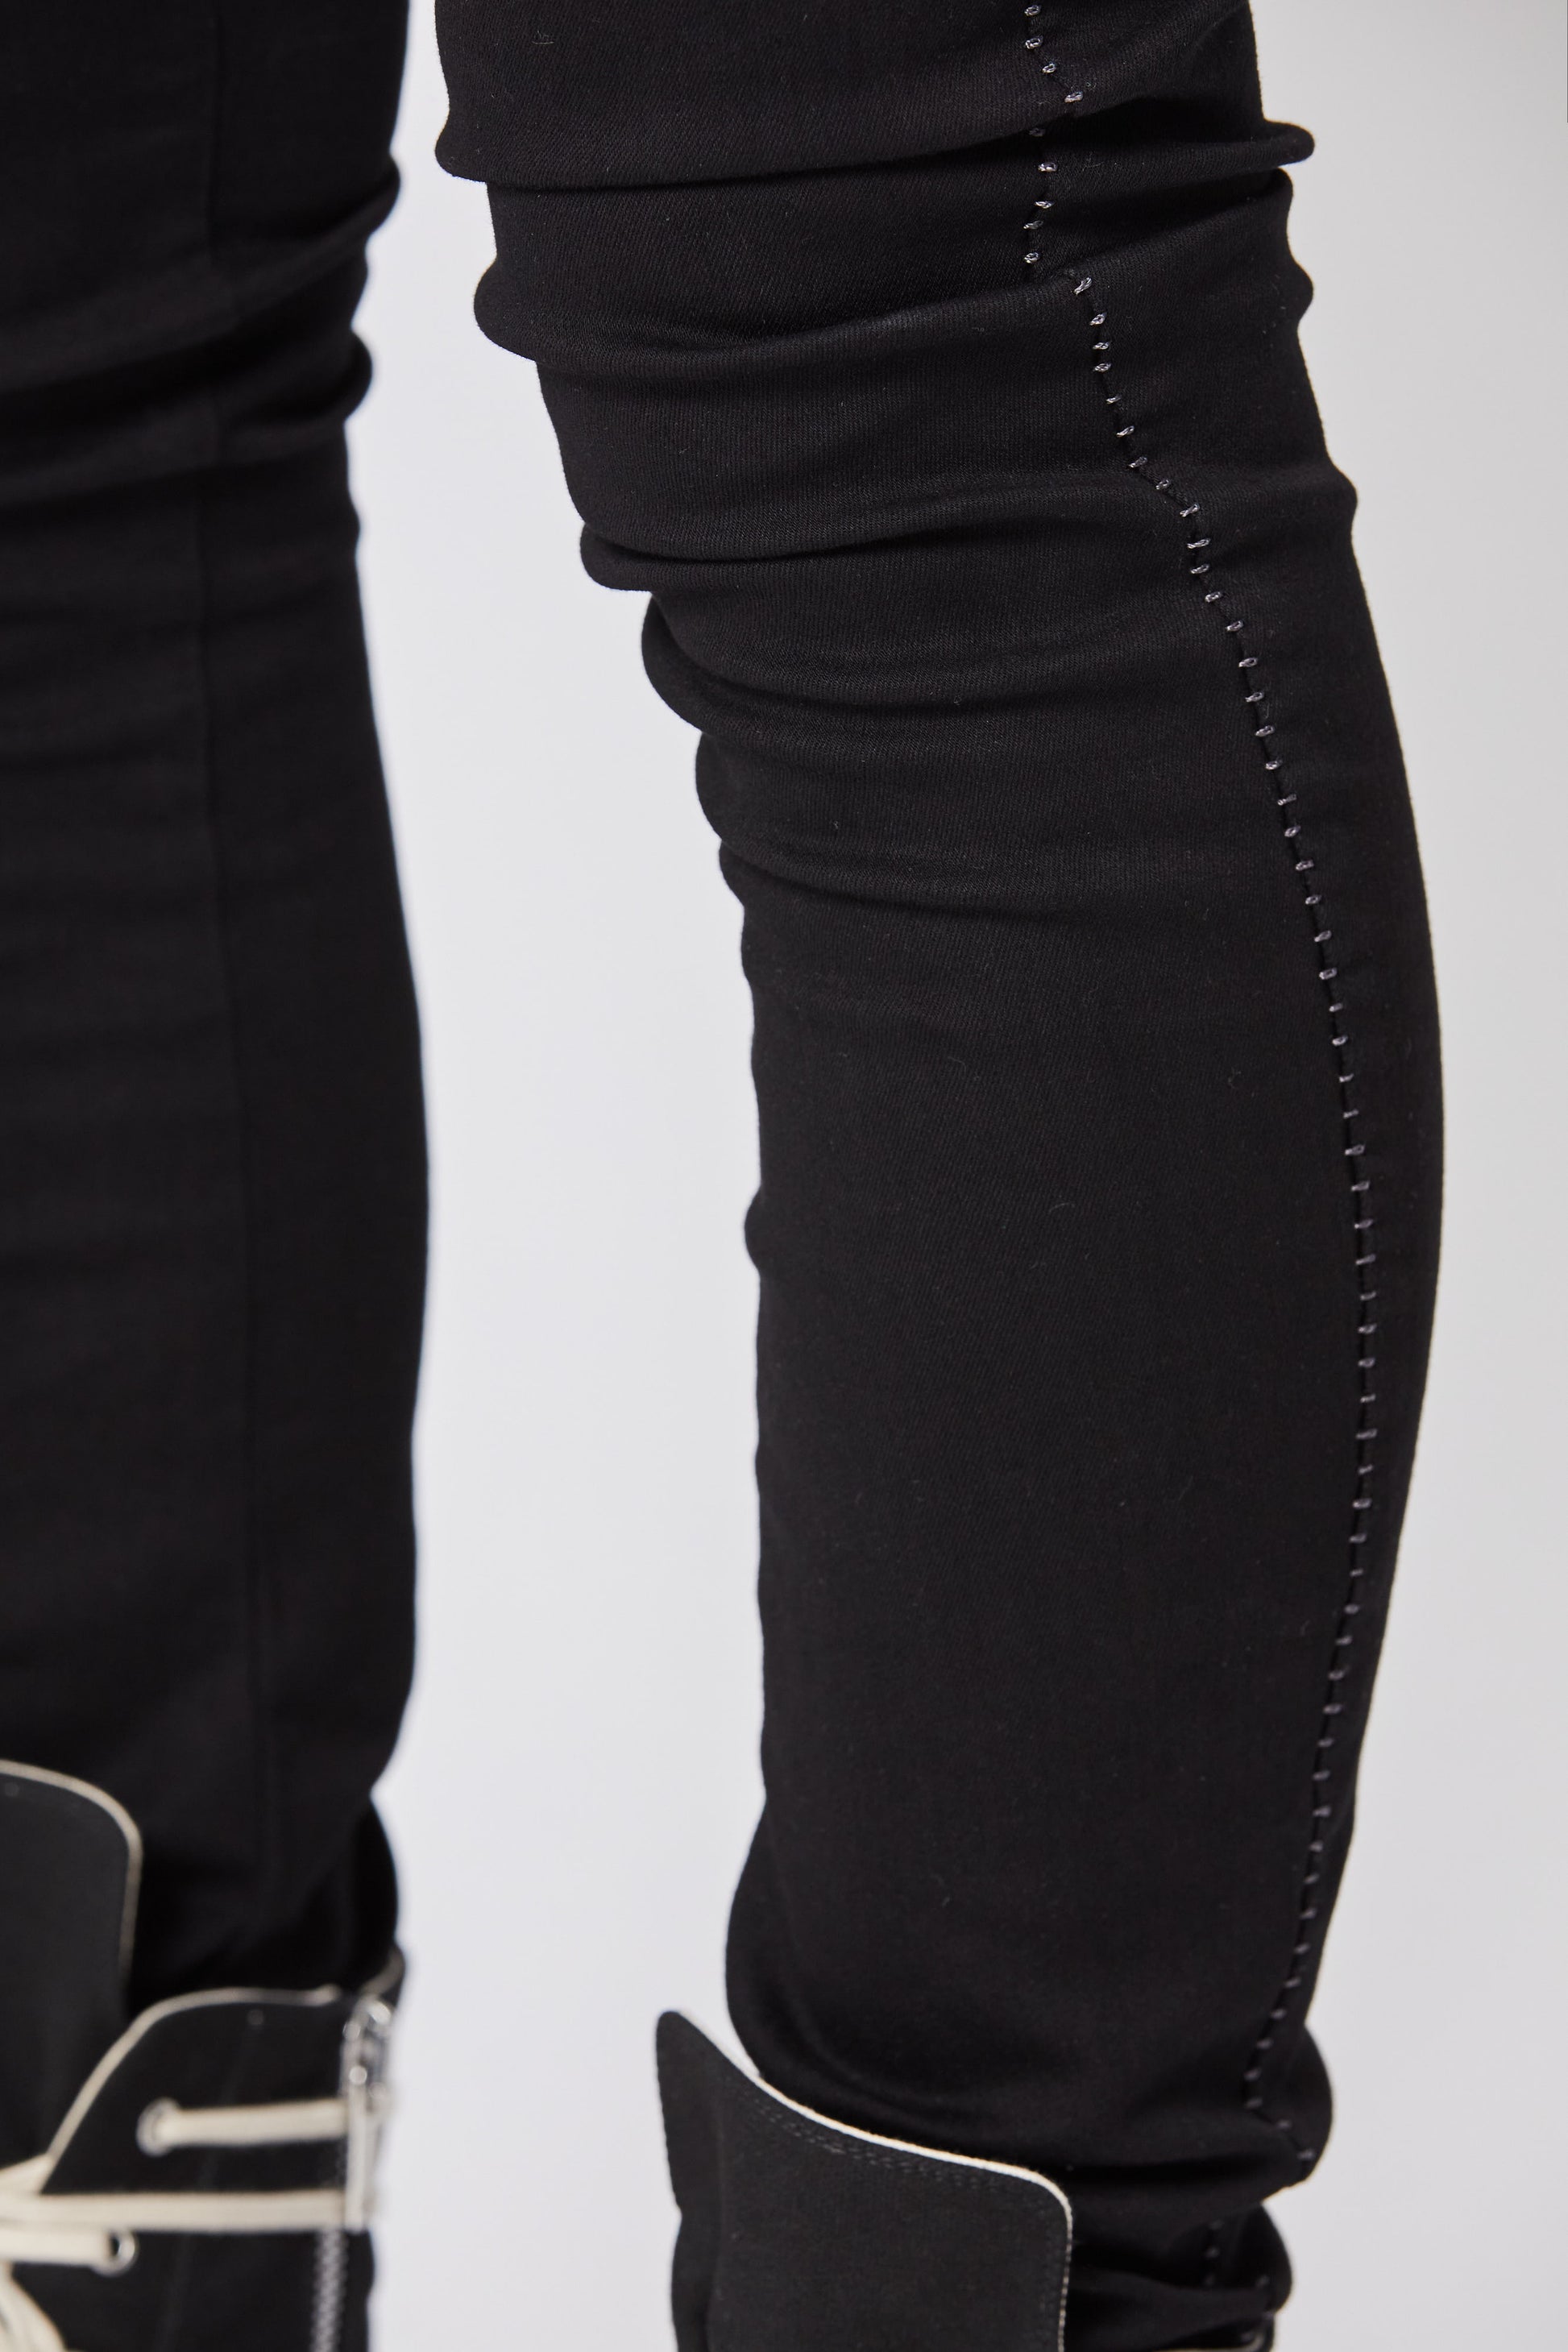 Slim Archive Black The MT – Jeans Stretch Denim 79 Fit